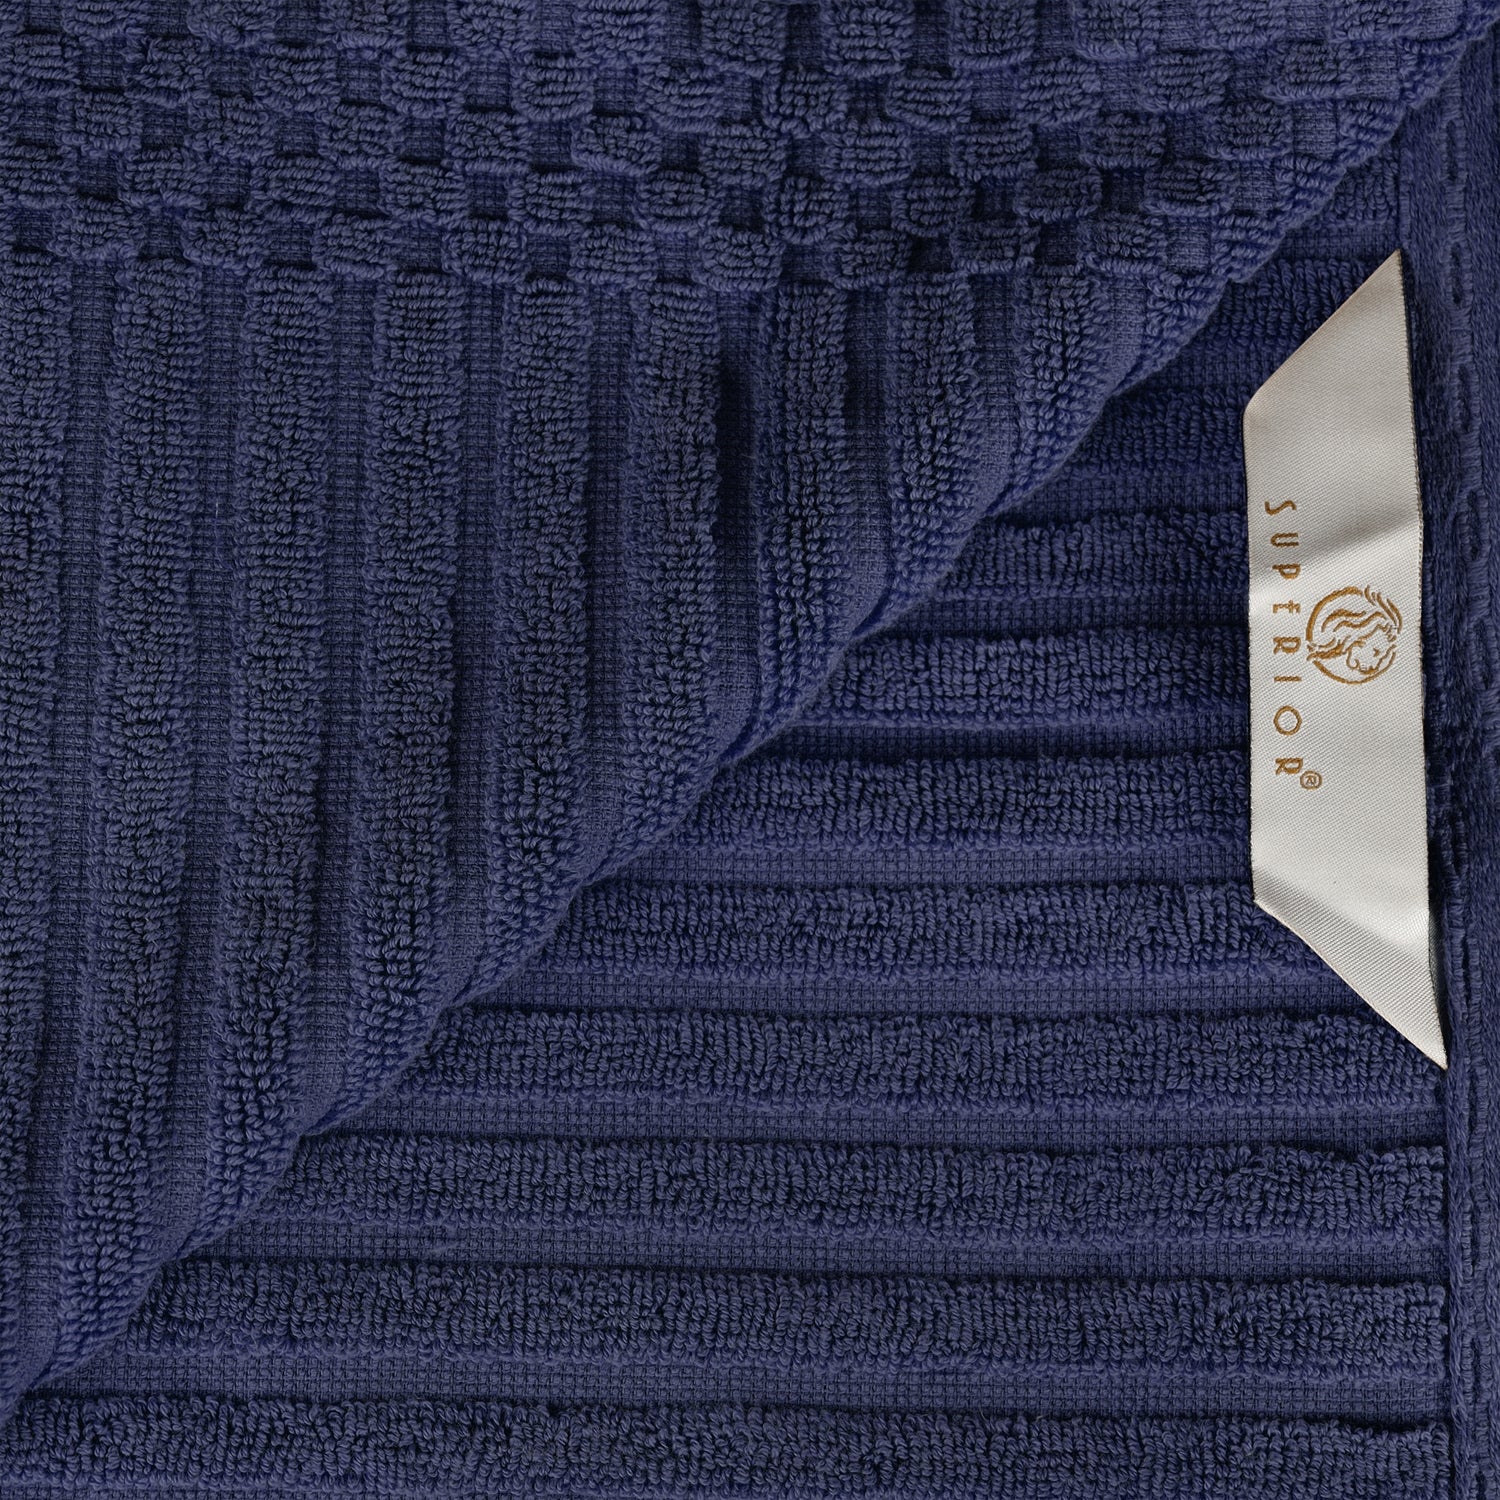 Superior Soho Ribbed Textured Cotton Ultra-Absorbent Bath Sheet & Bath Towel Set - Navy Blue